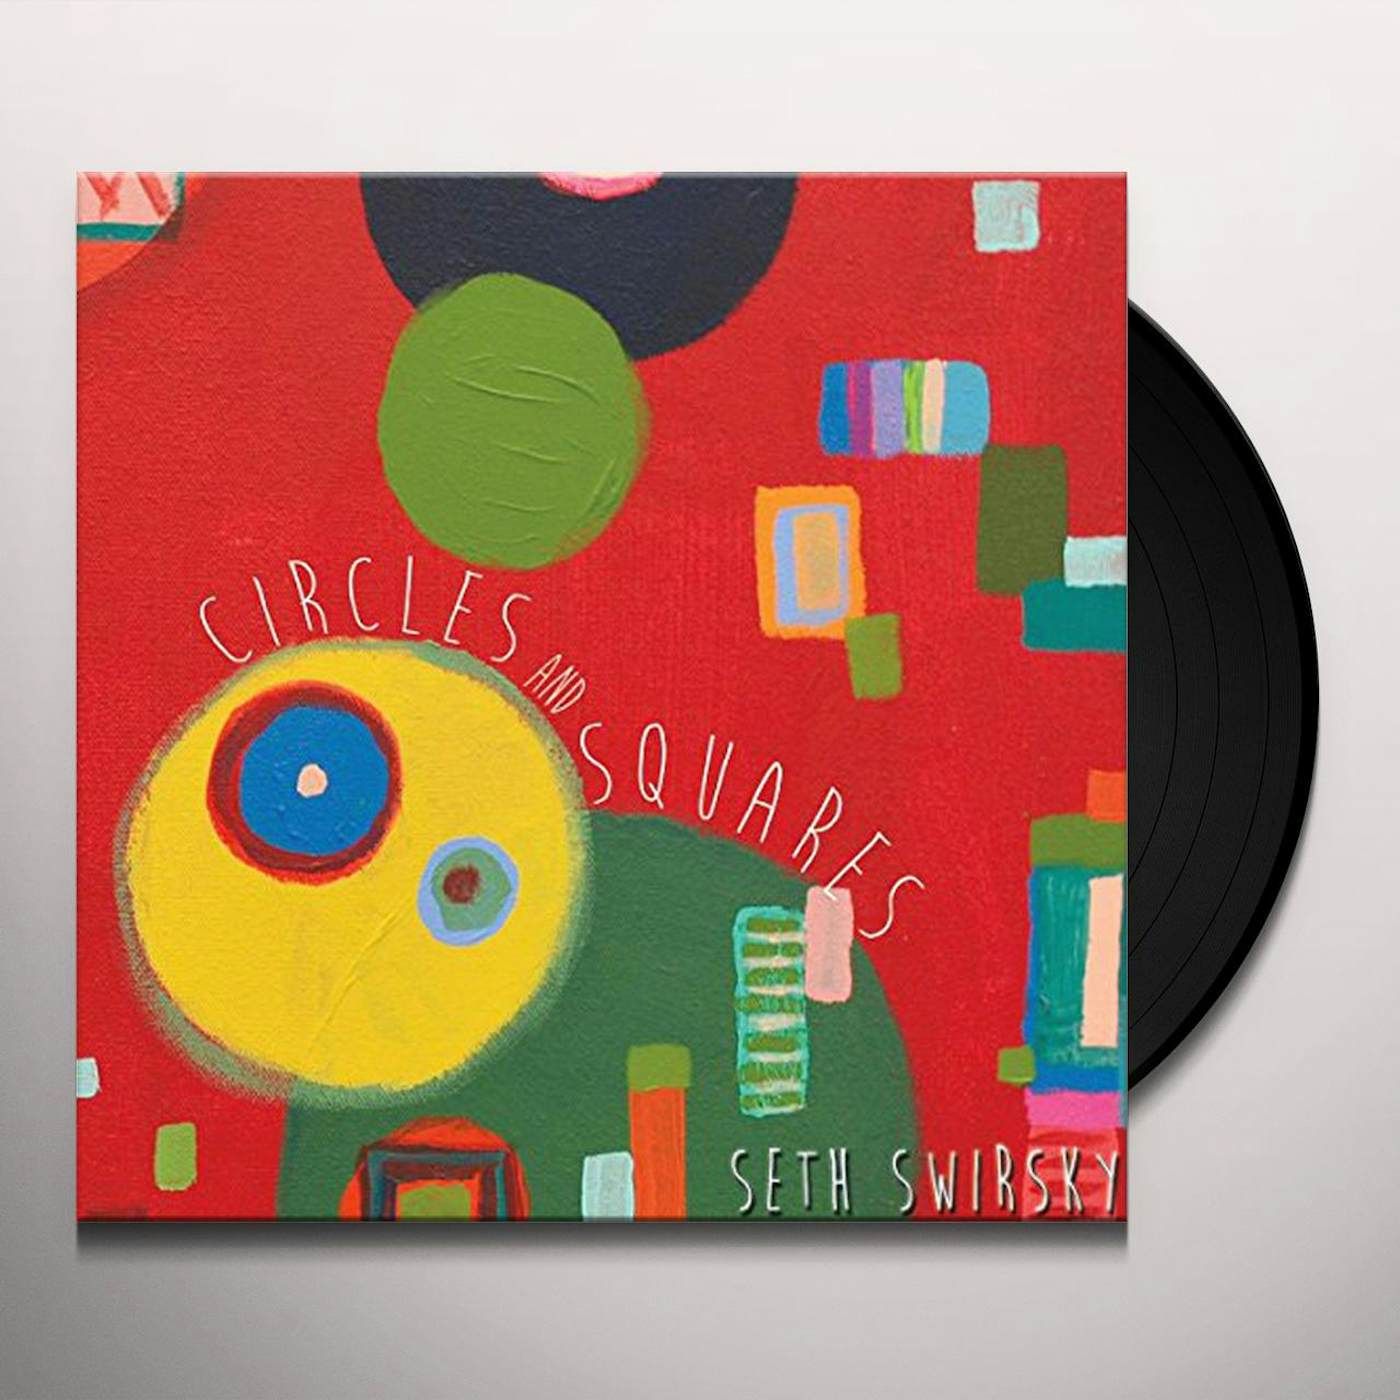 Seth Swirsky Circles and Squares Vinyl Record